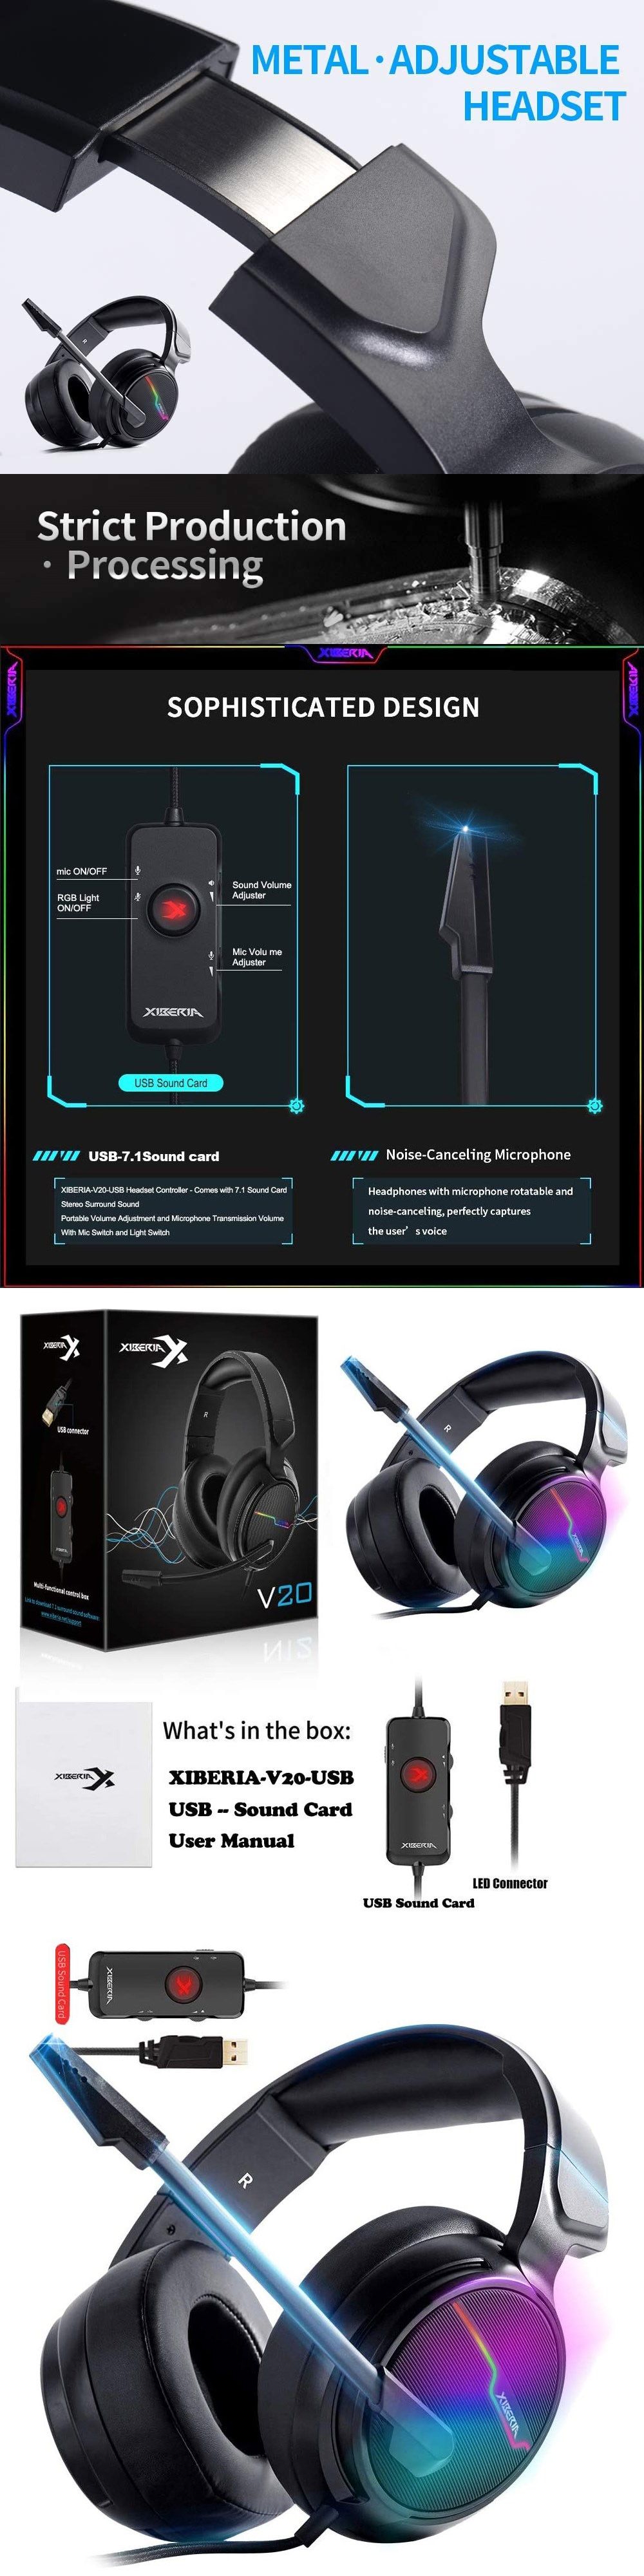 Xiberia-V20-Gaming-Headset-USB35mm-Wired-Bass-Gaming-Headphone-71-Surround-Stereo-Headphones-Earphon-1675997